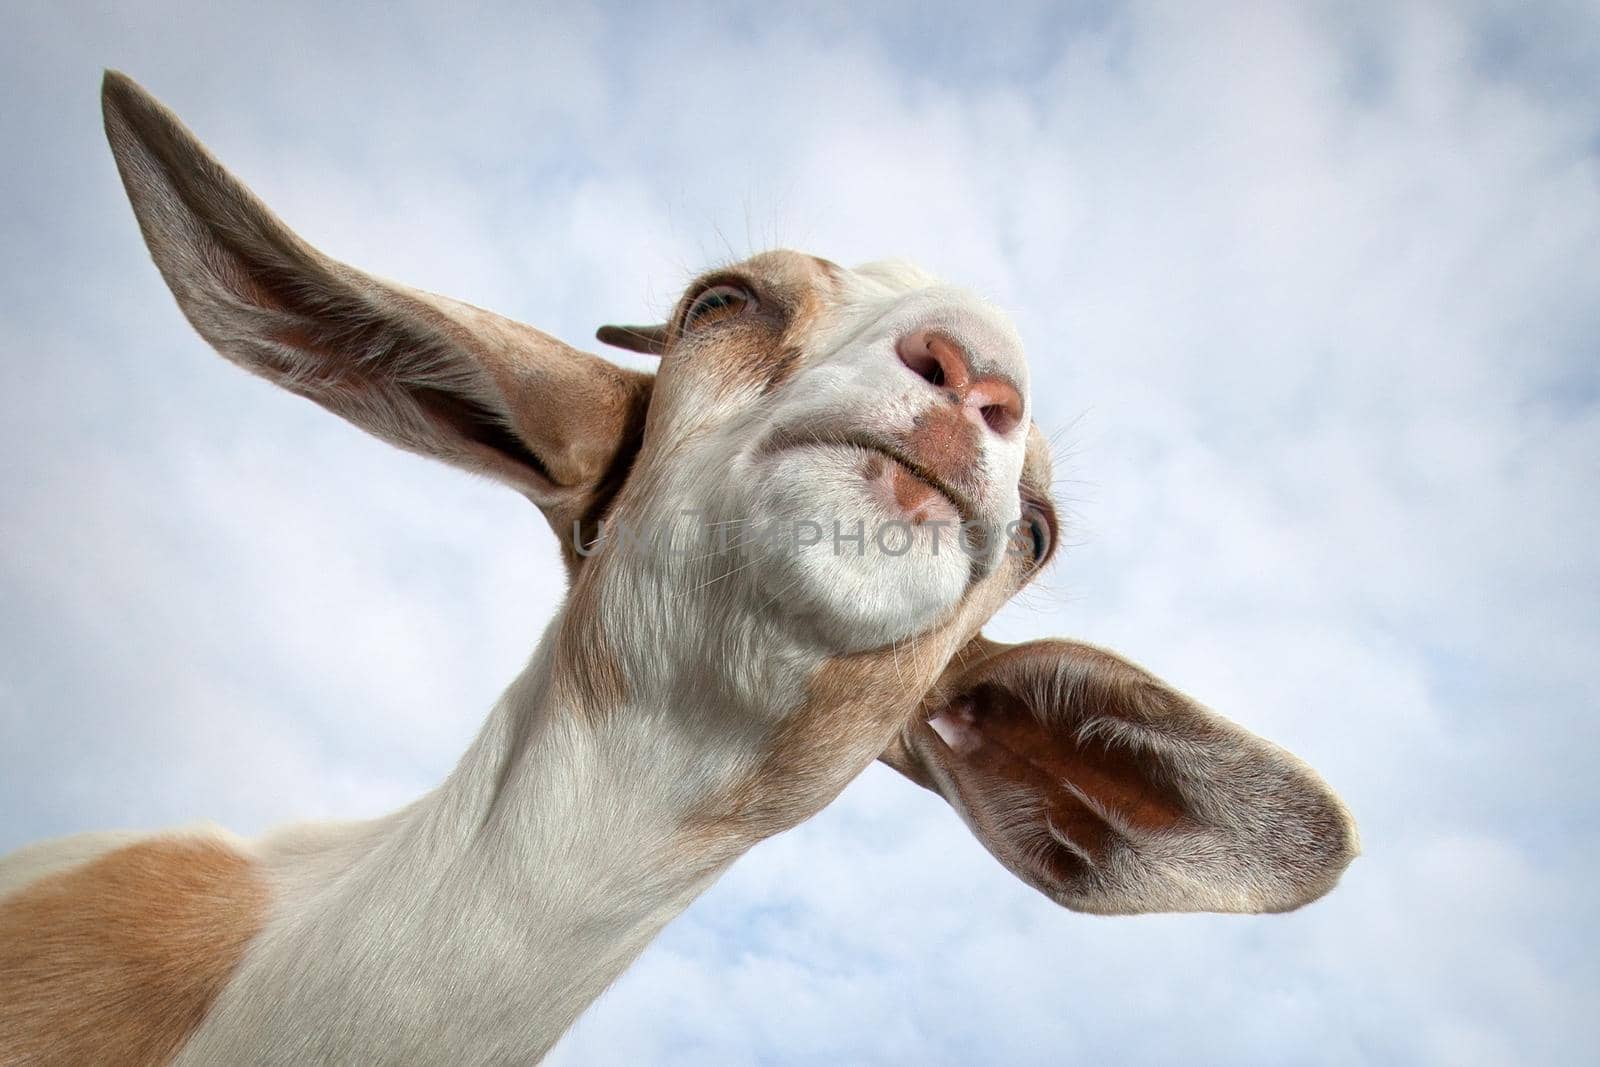 Goat flight by Lincikas